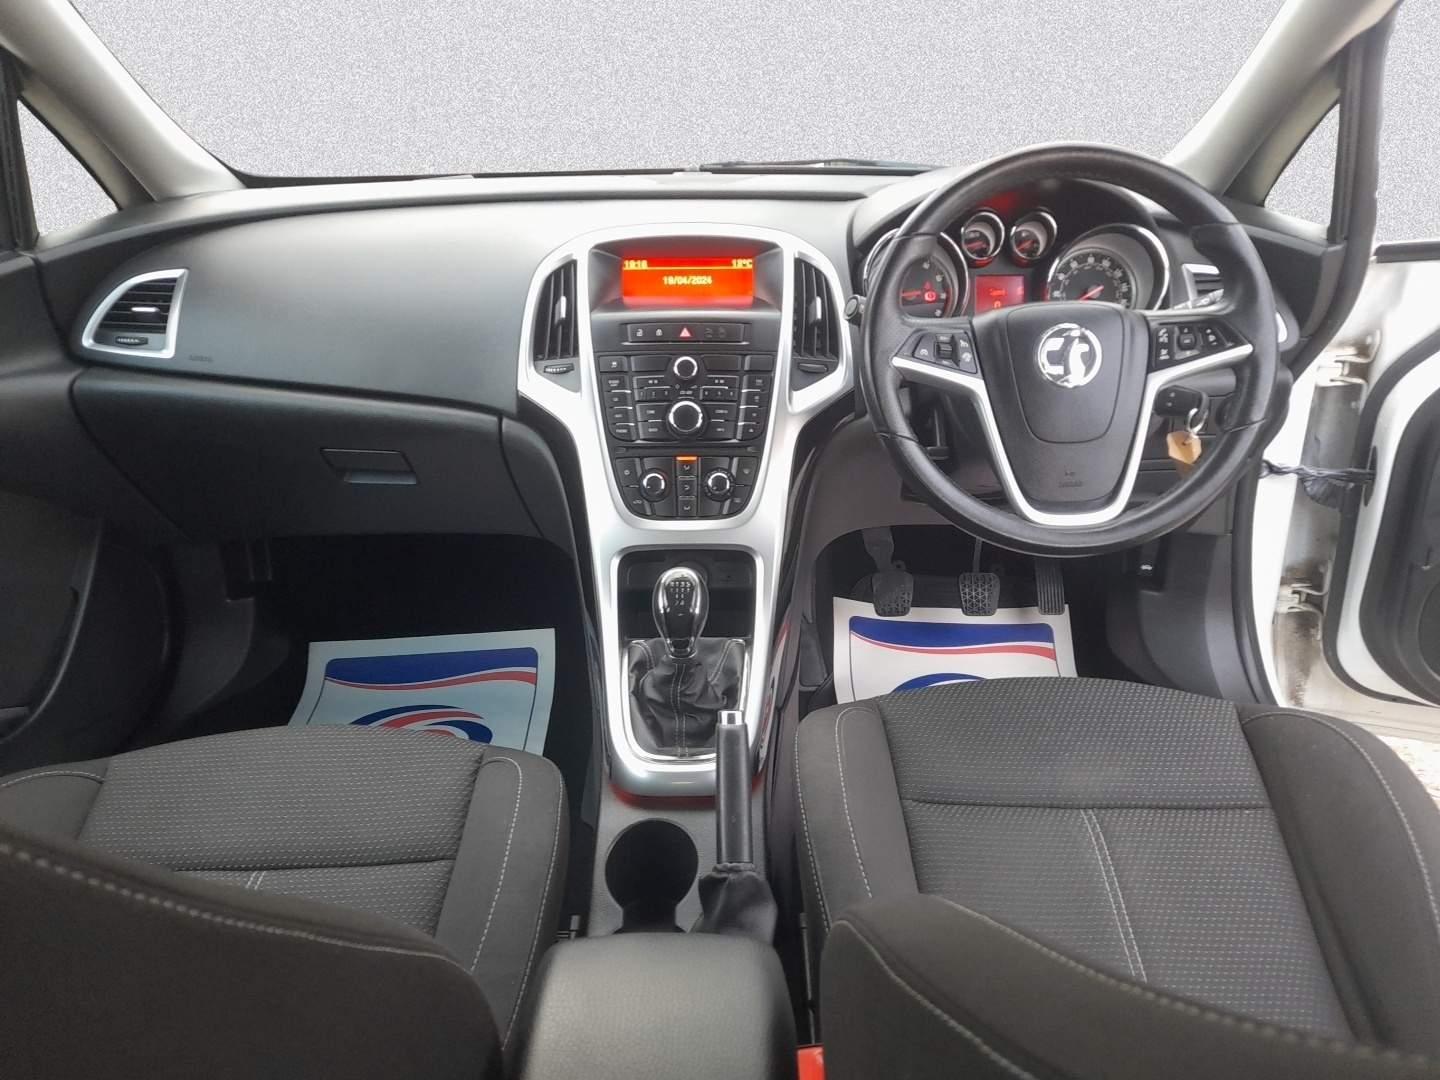 Vauxhall Astra 1.6 16v SRi Euro 5 5dr